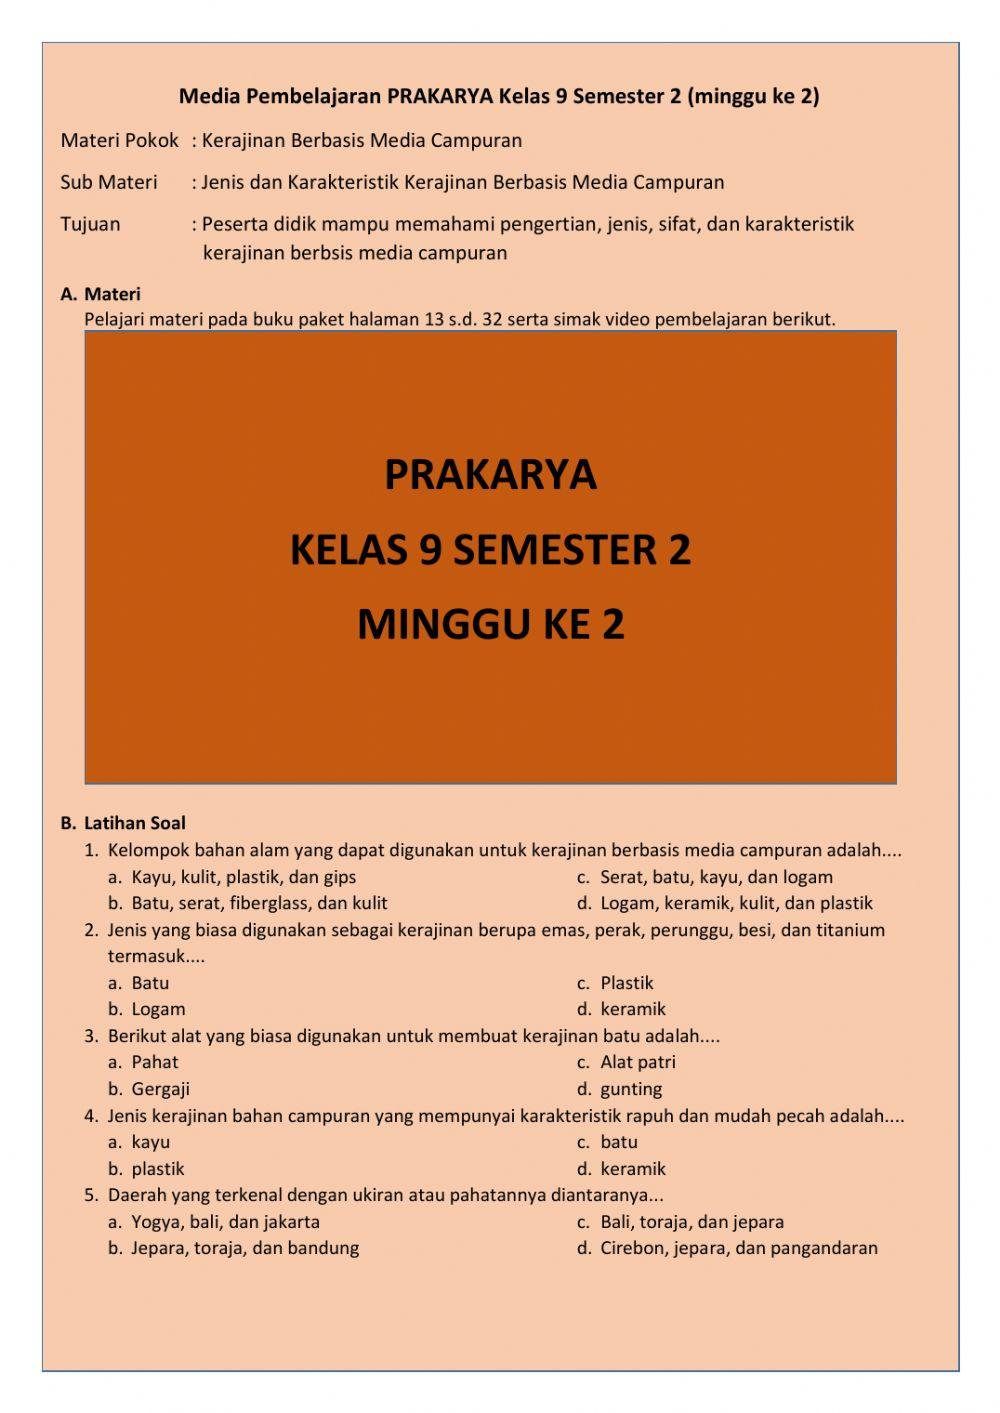 Prakarya kelas 9-2 minggu 2